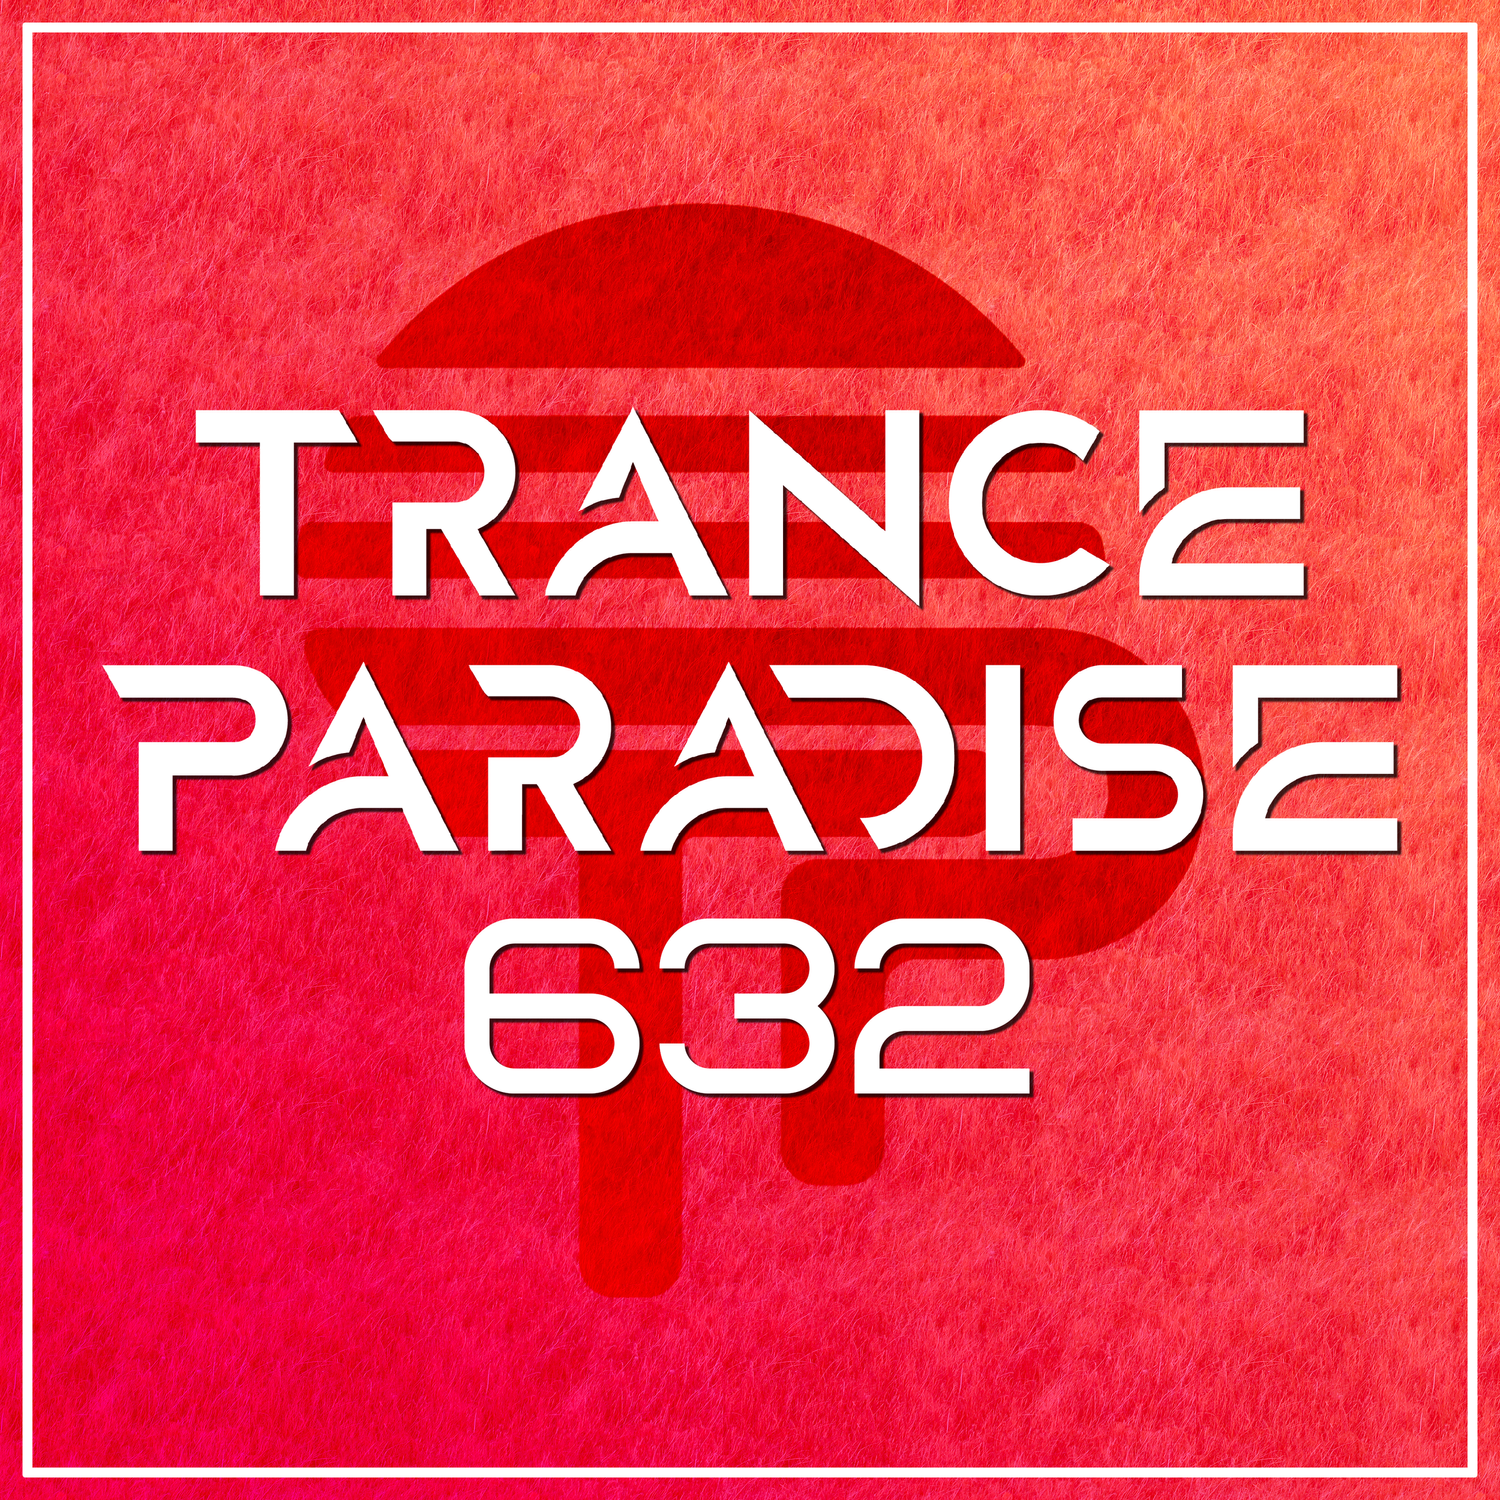 Trance Paradise 632